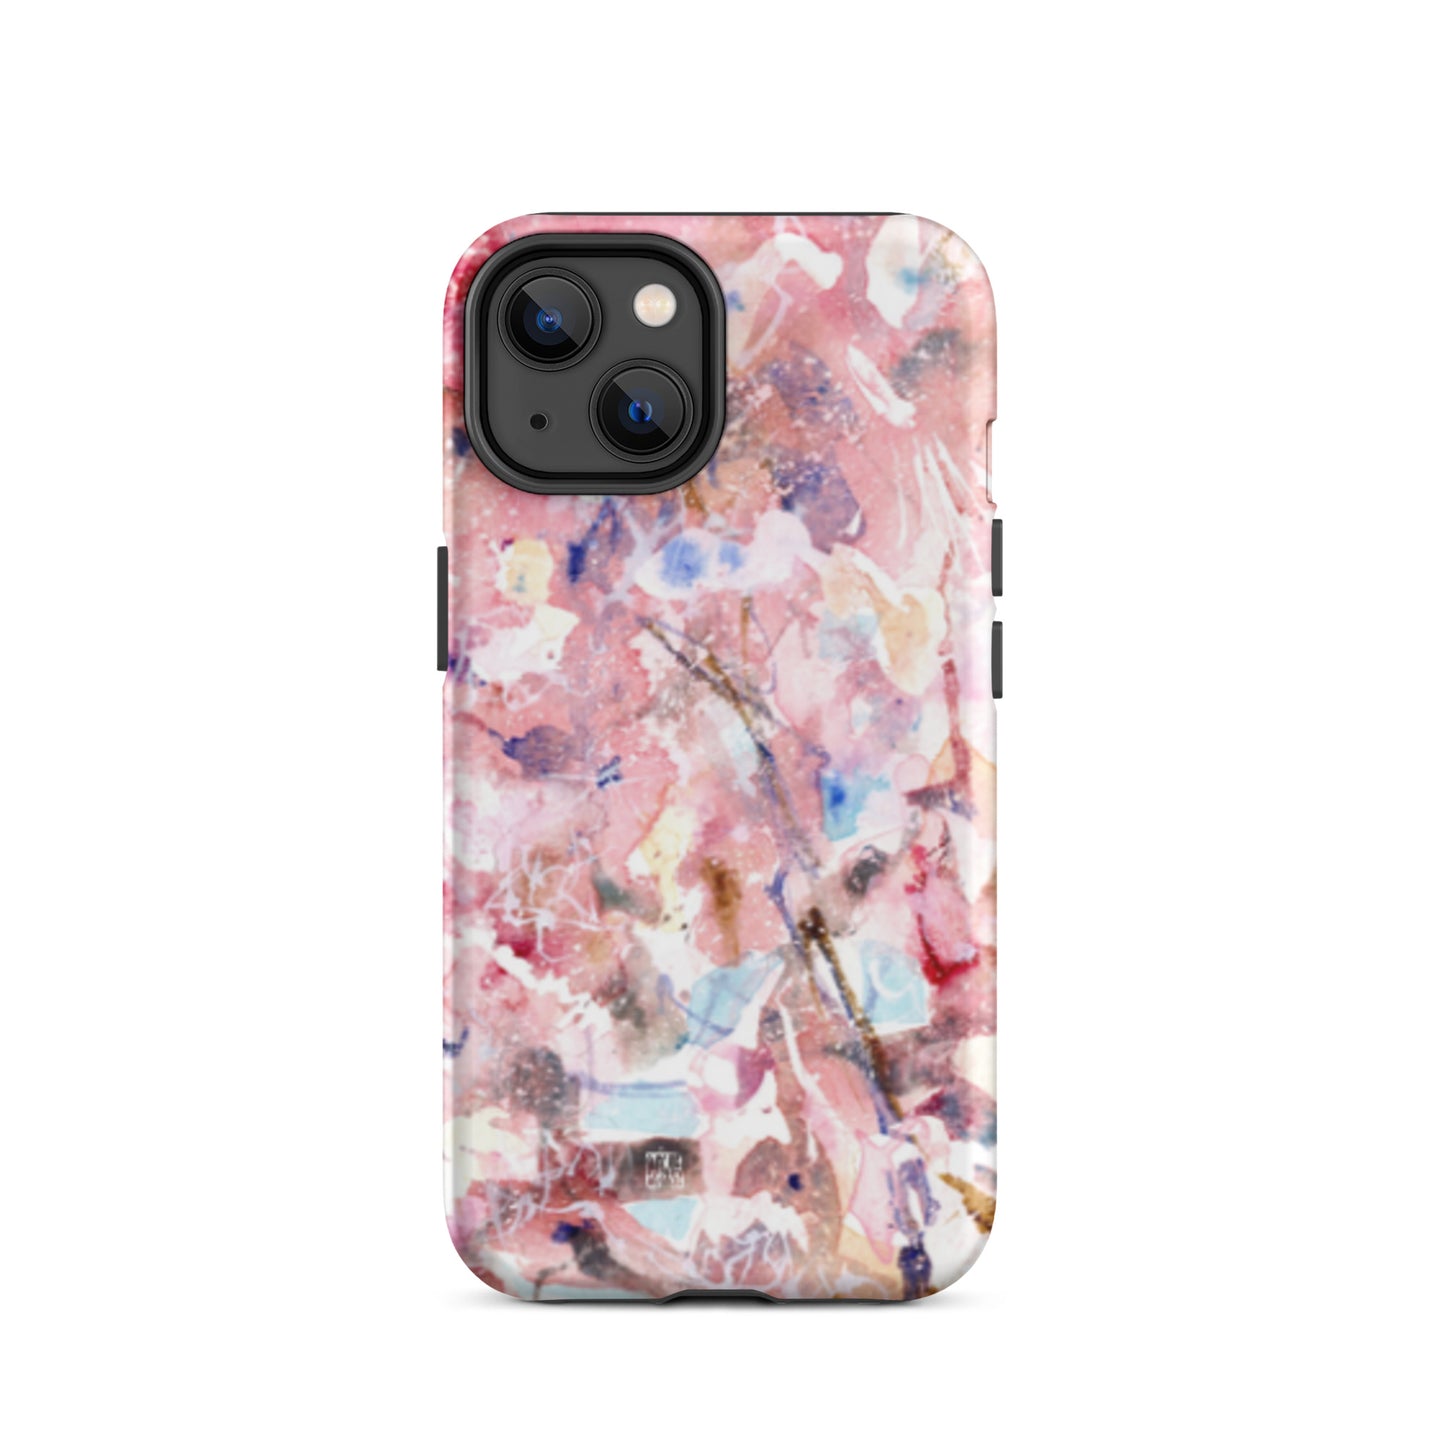 Tough iPhone Art Case - Cherry Blossom